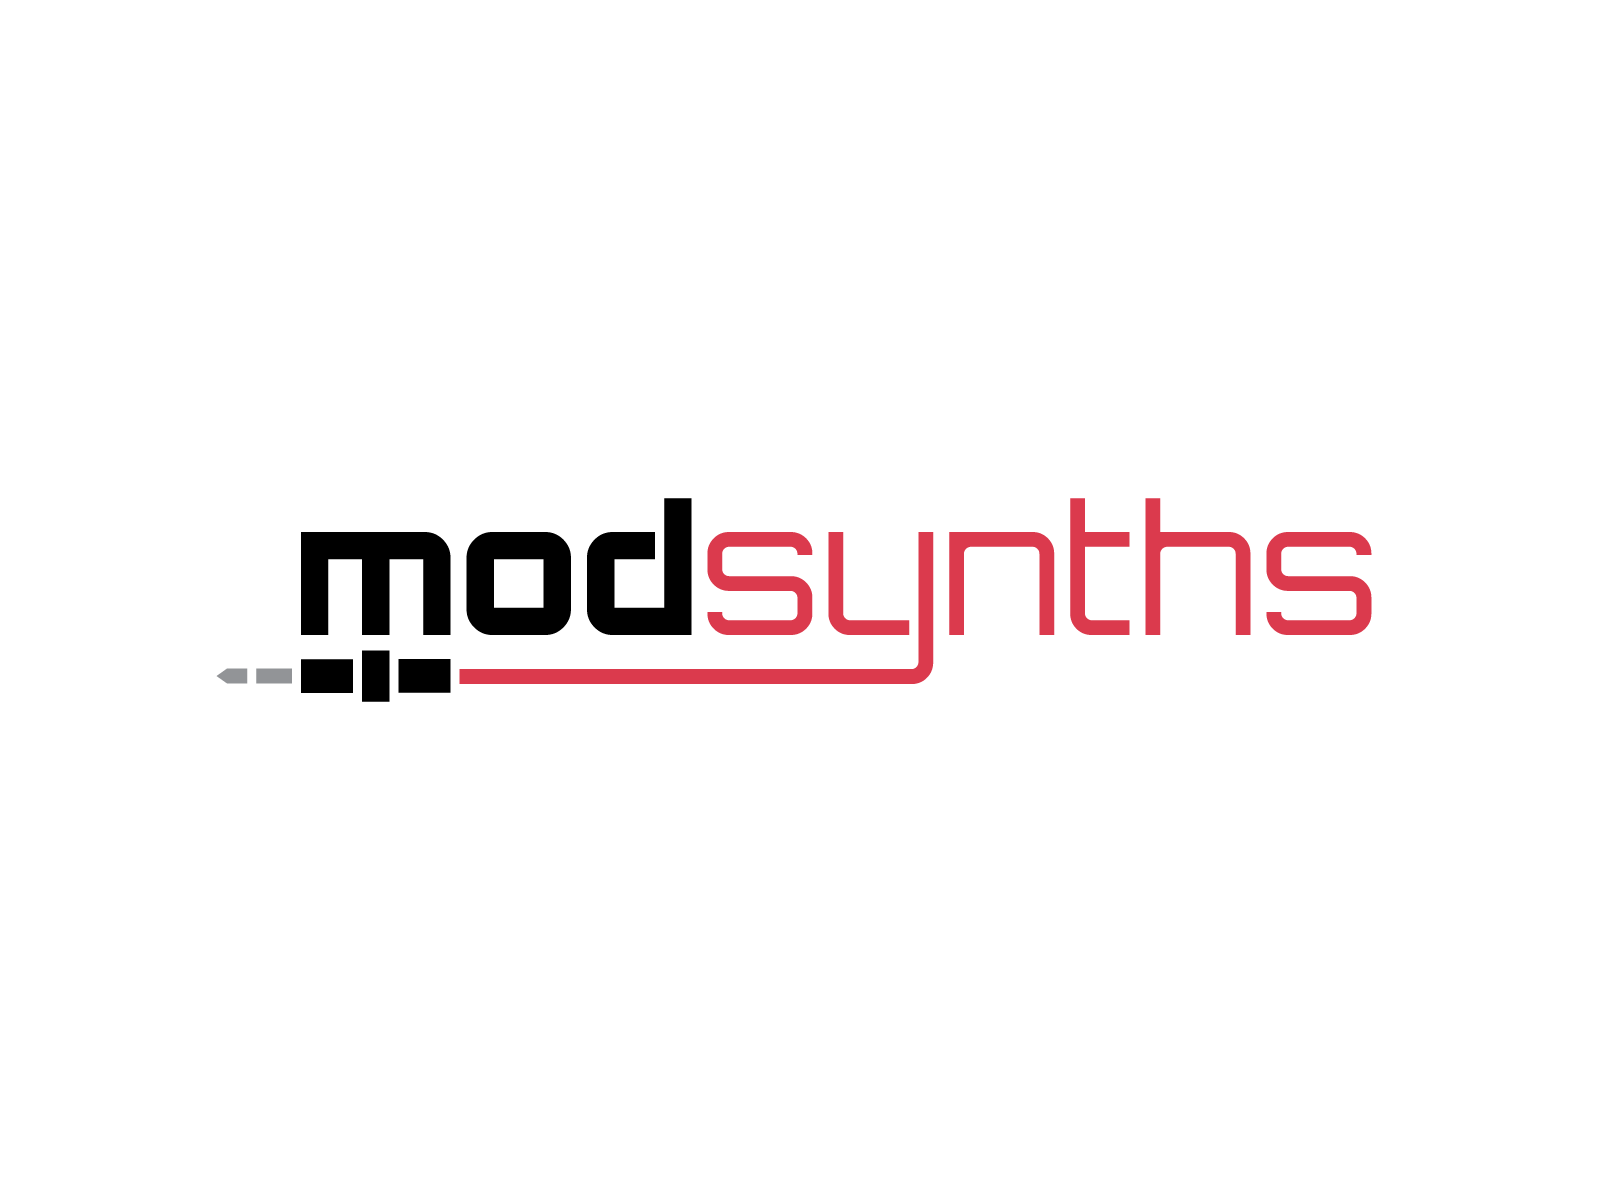 Logo Design - Mod Synths by Marcel Nehlsen on Dribbble